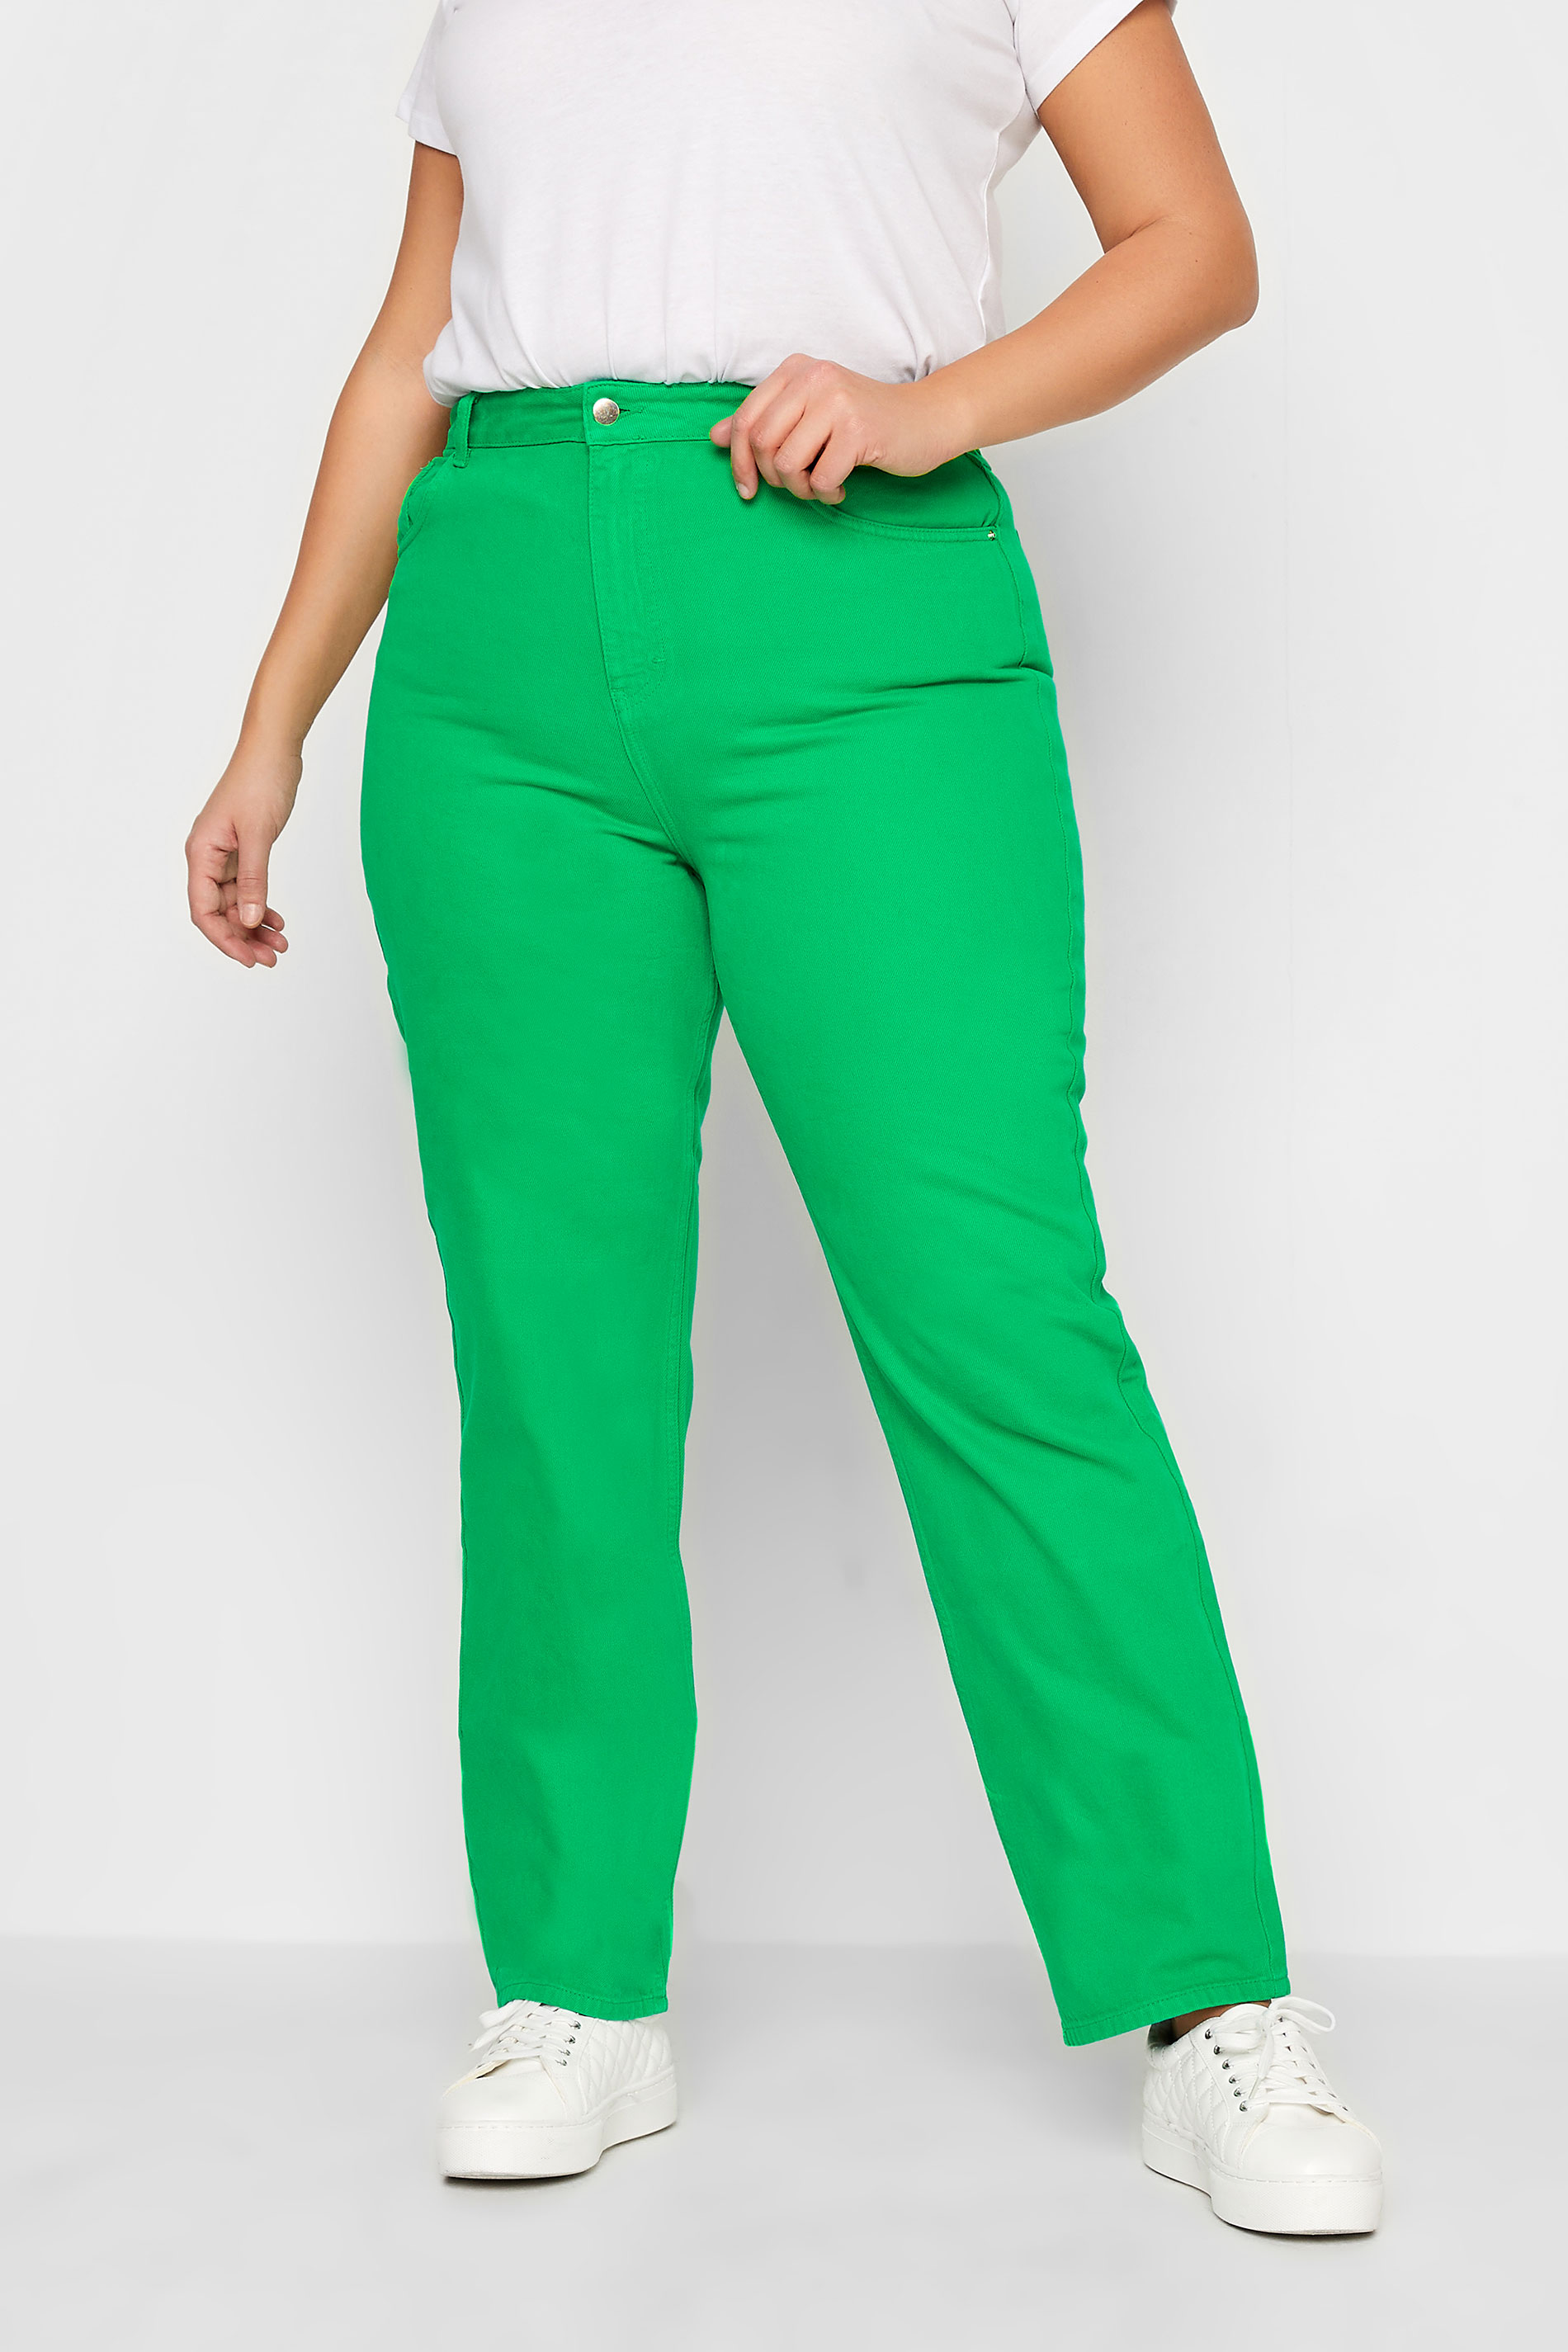 Tall Women's Bright Green Mom Jeans | Long Tall Sally  1